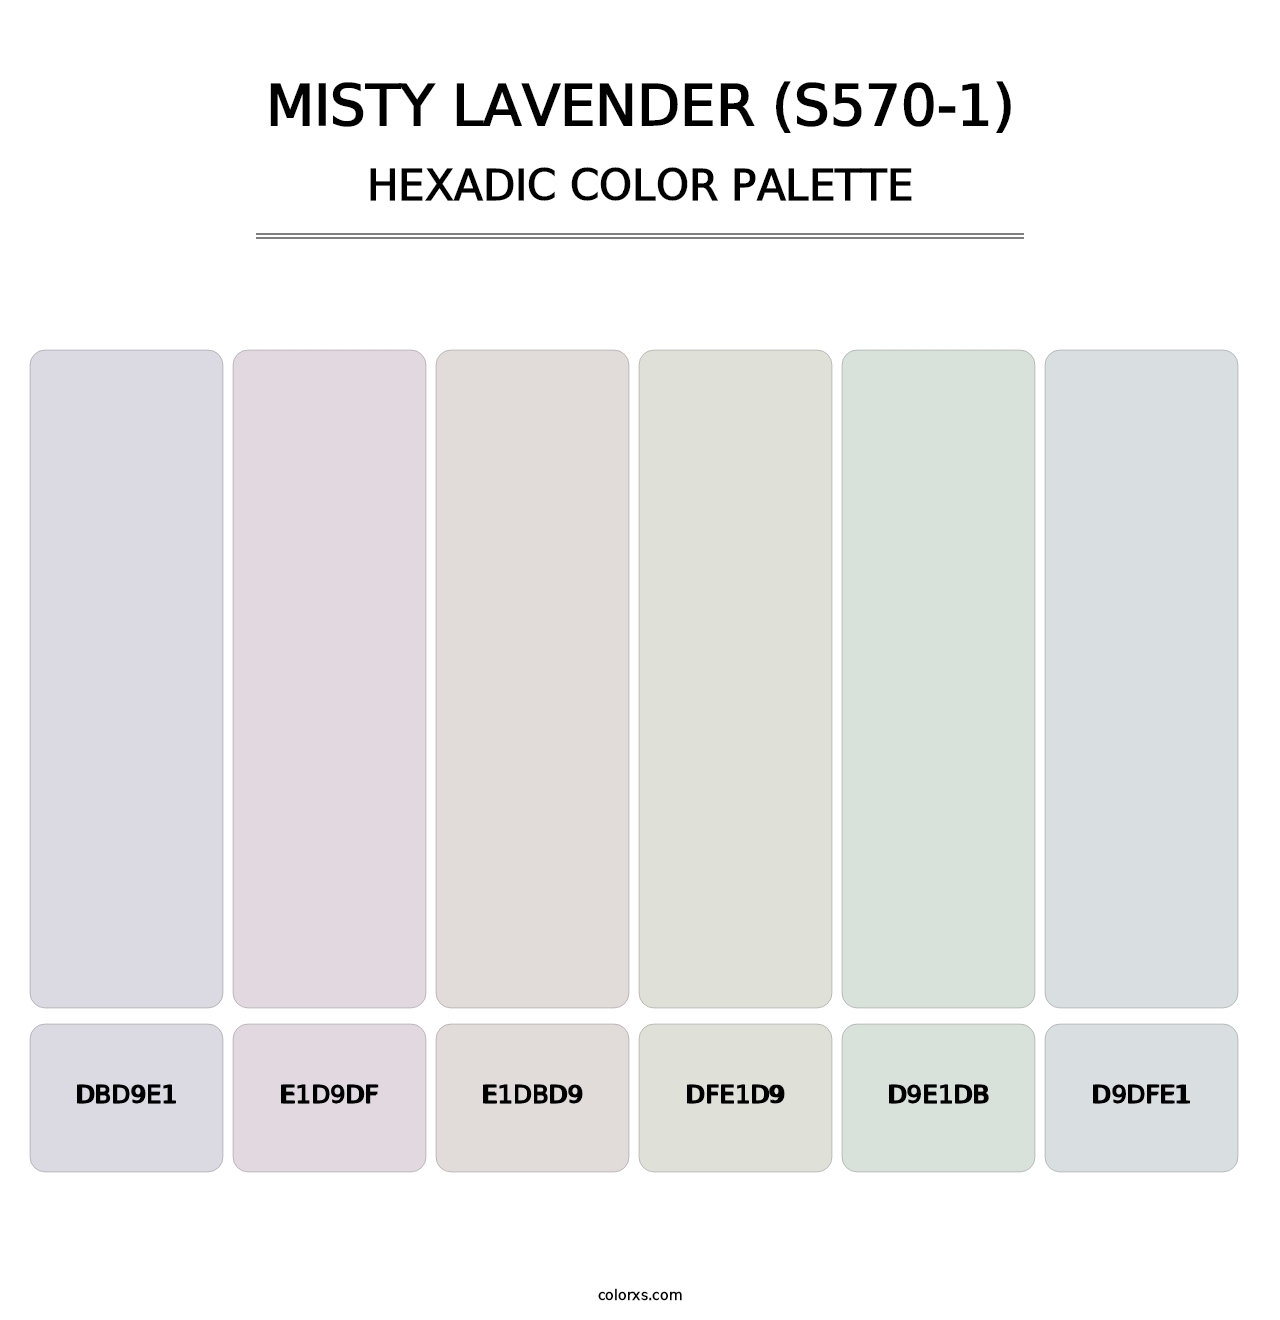 Misty Lavender (S570-1) - Hexadic Color Palette